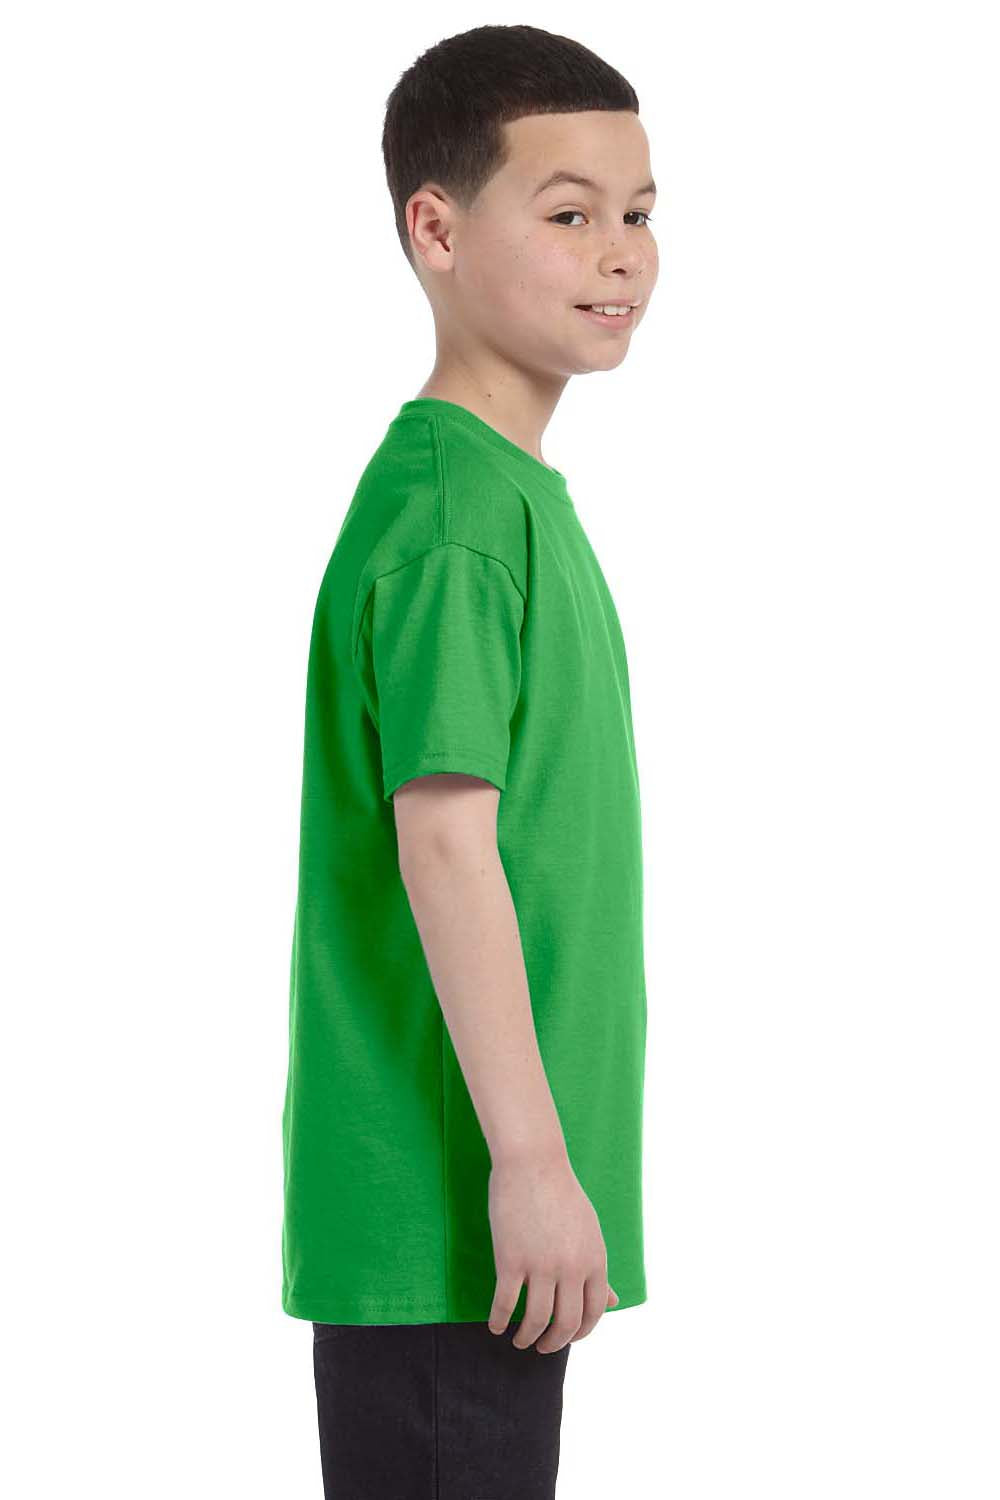 Hanes 54500 Youth ComfortSoft Short Sleeve Crewneck T-Shirt Shamrock Green Side